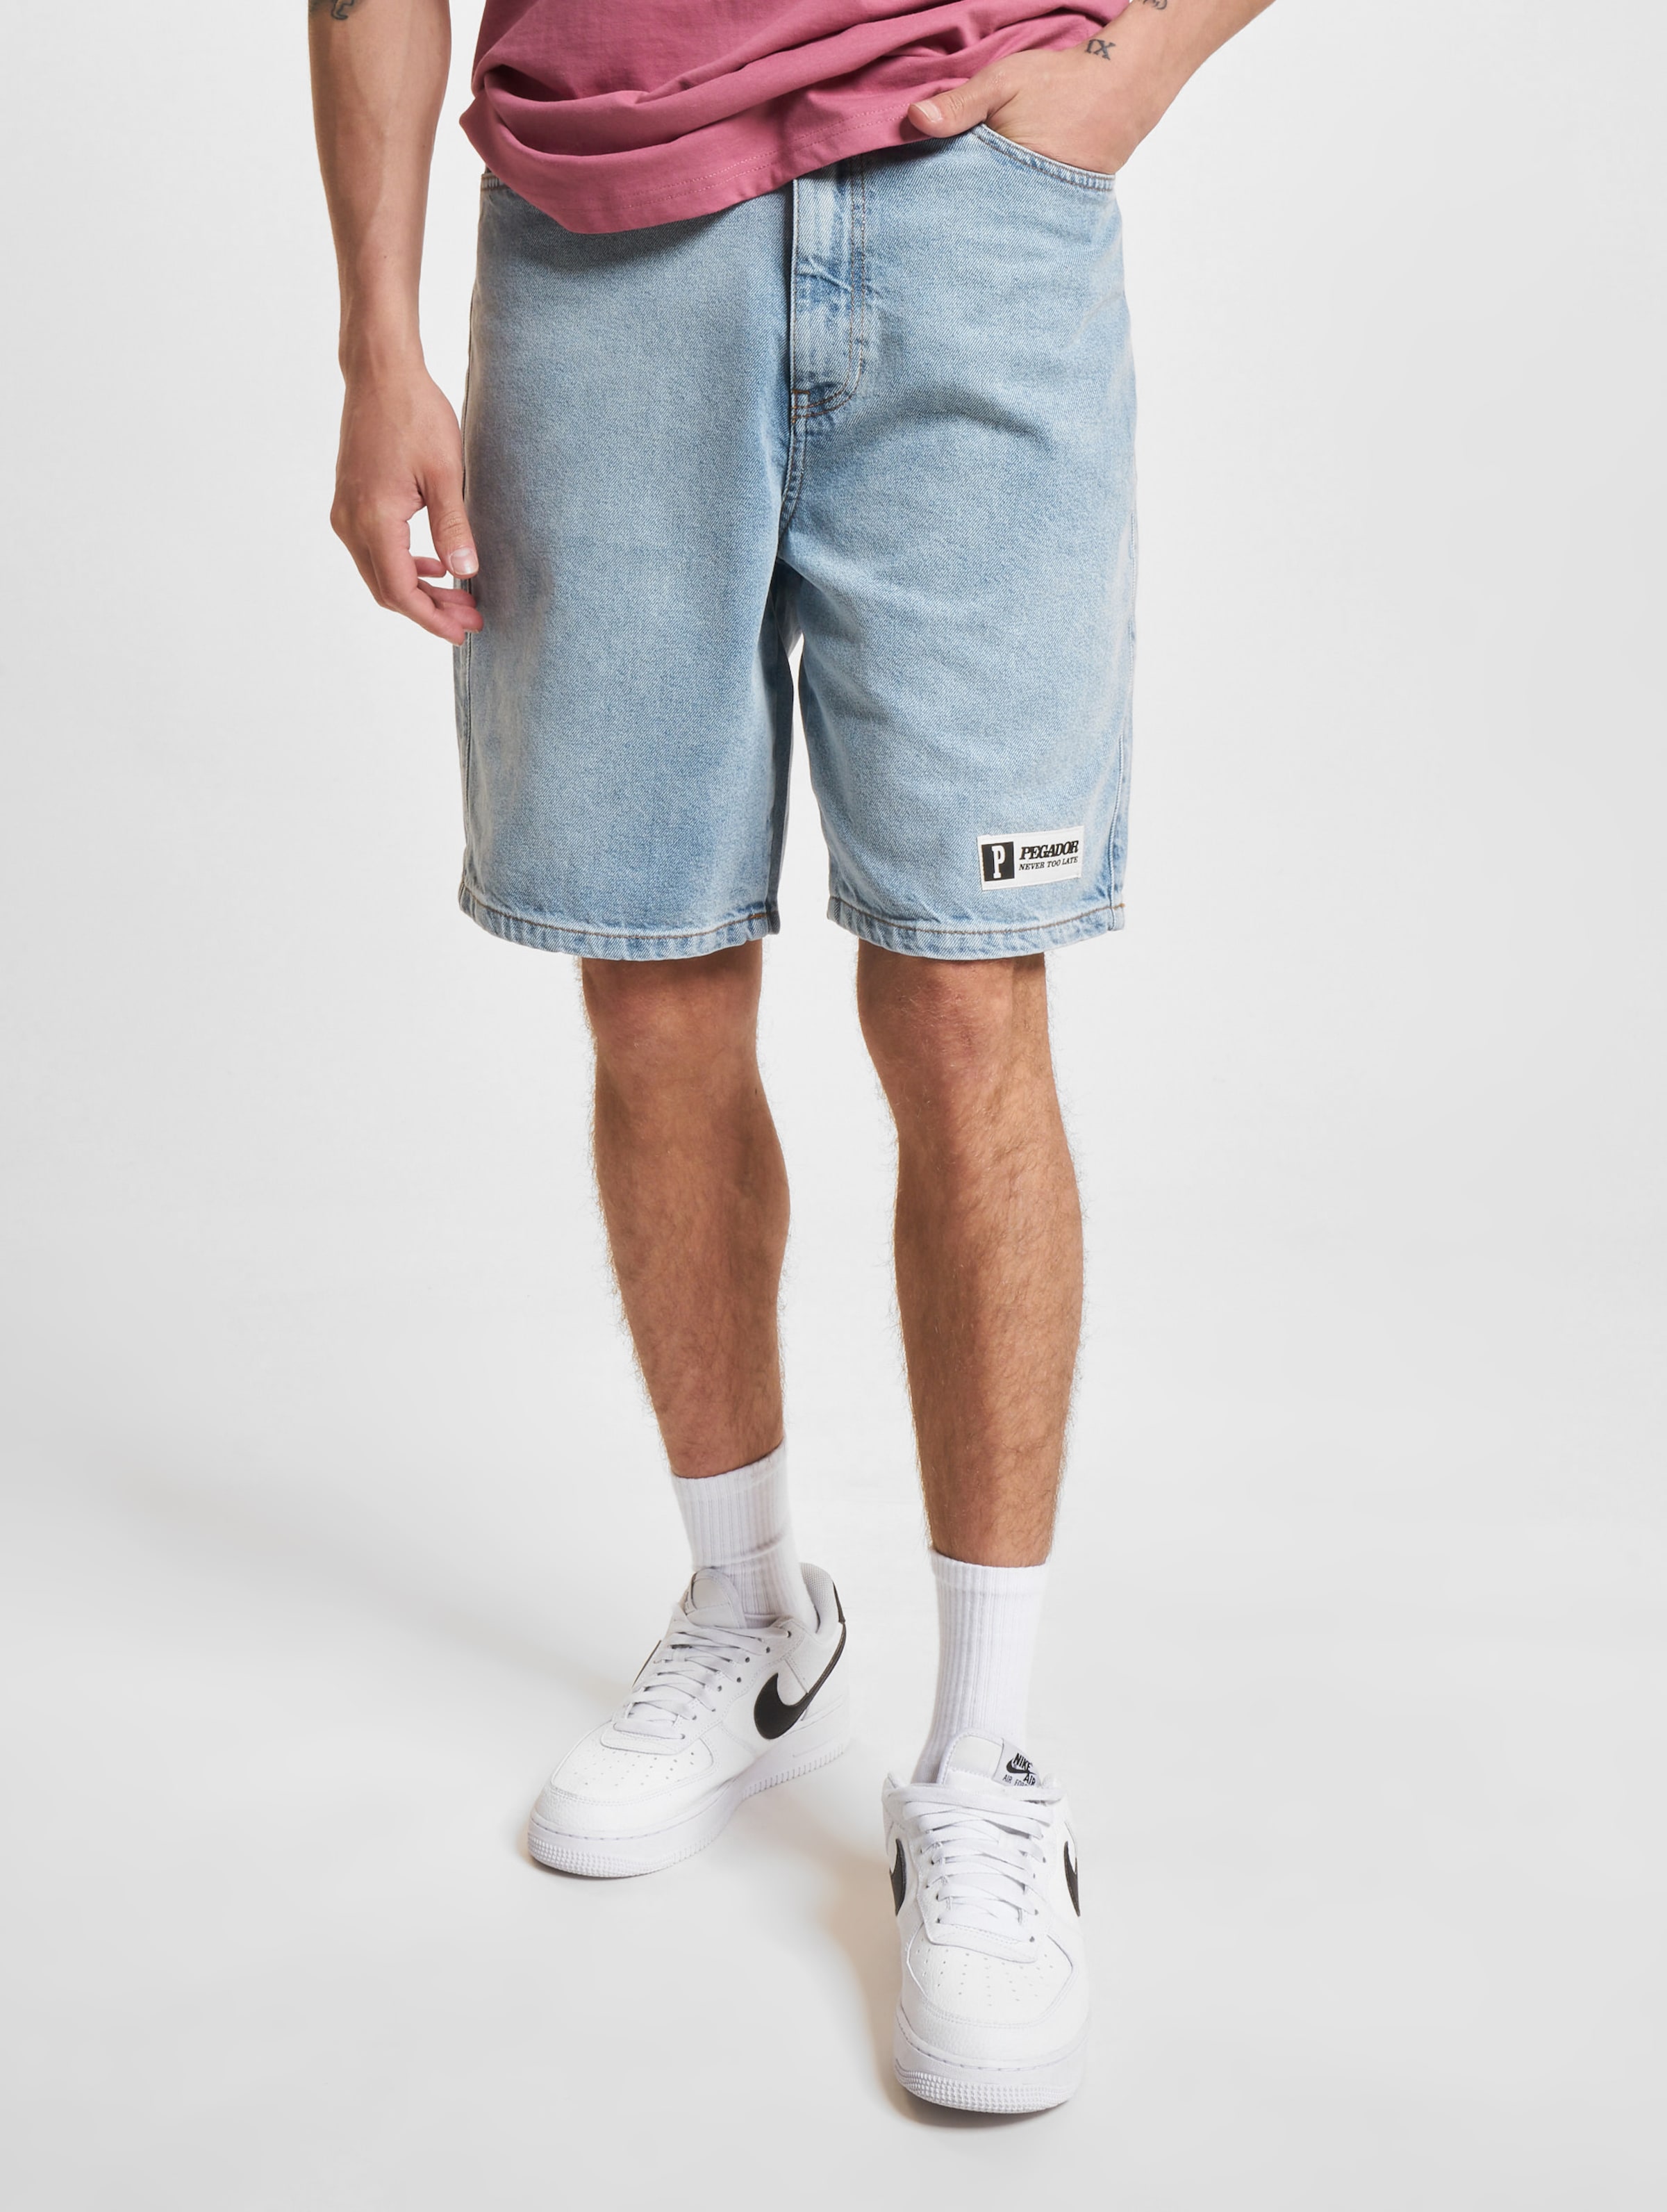 PEGADOR Moores Jeans Shorts Männer,Unisex op kleur blauw, Maat 38